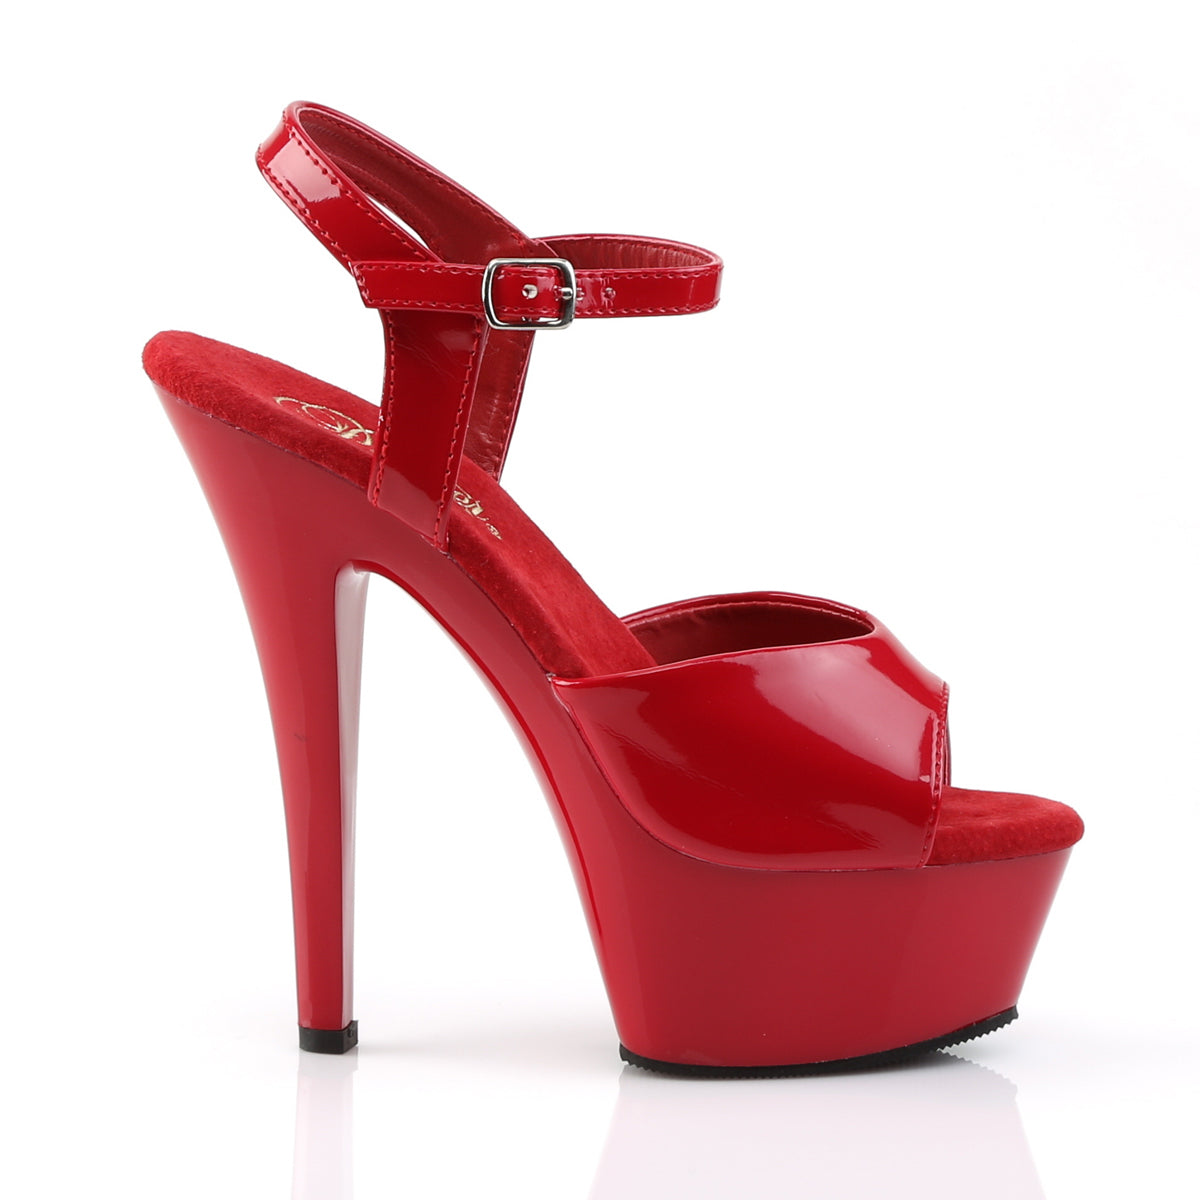 KISS-209 Red Patent Platform Sandal Pleaser